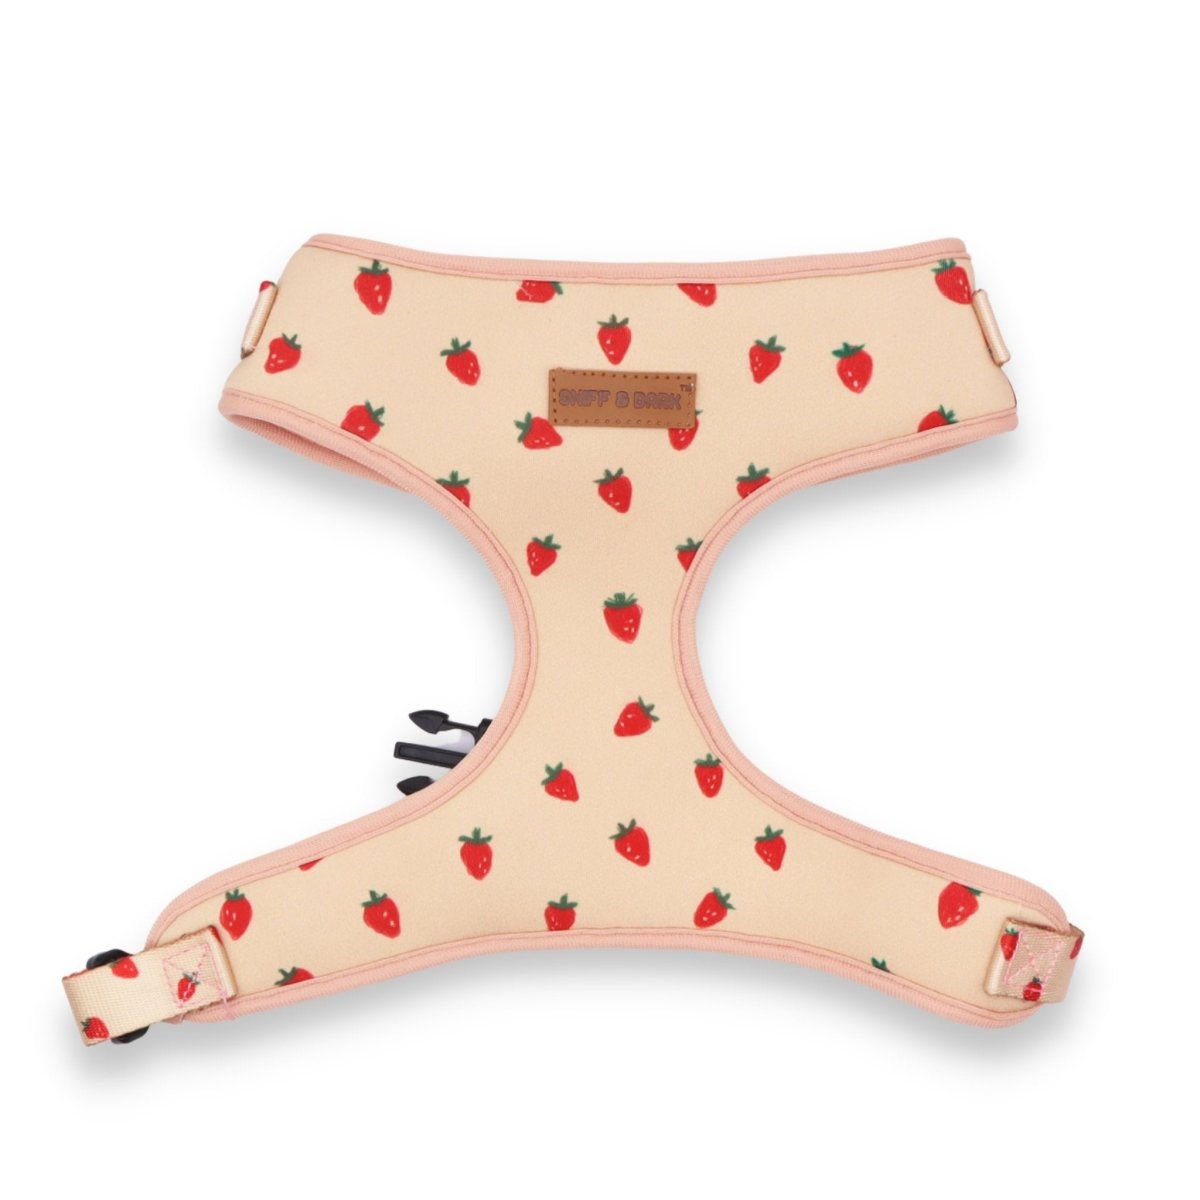 Strawberry Dog Harness & Leash Set